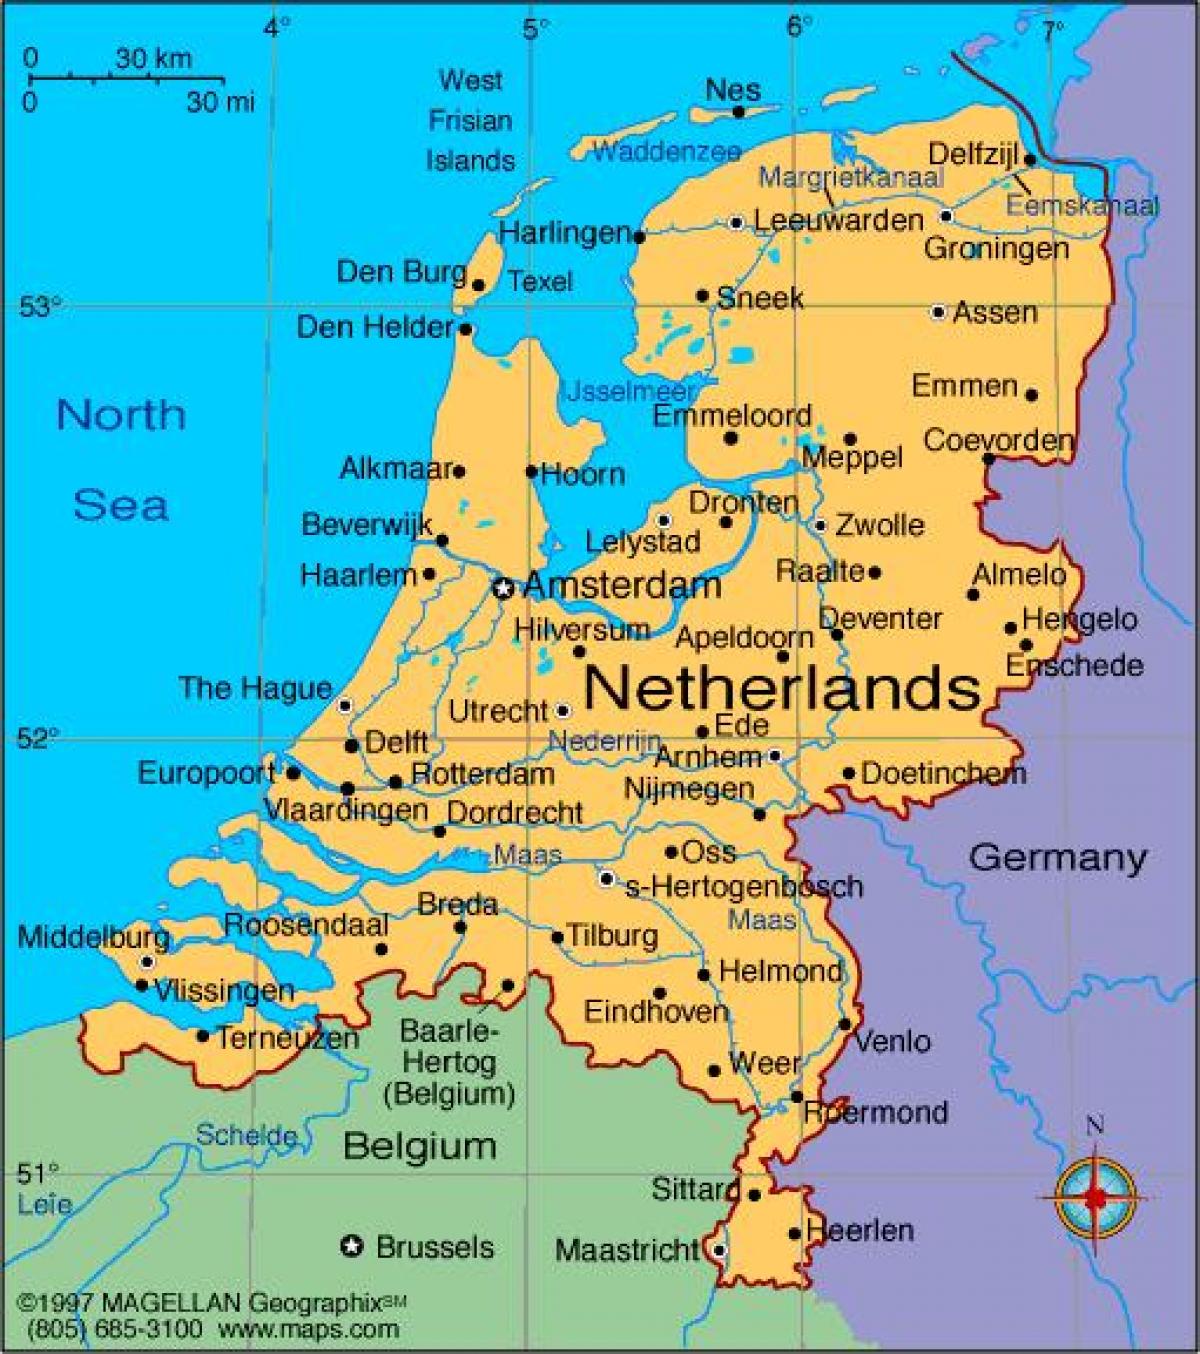 karta europe s gradovima Nizozemska karta grada   karta Nizozemske s gradovima (Zapadna  karta europe s gradovima